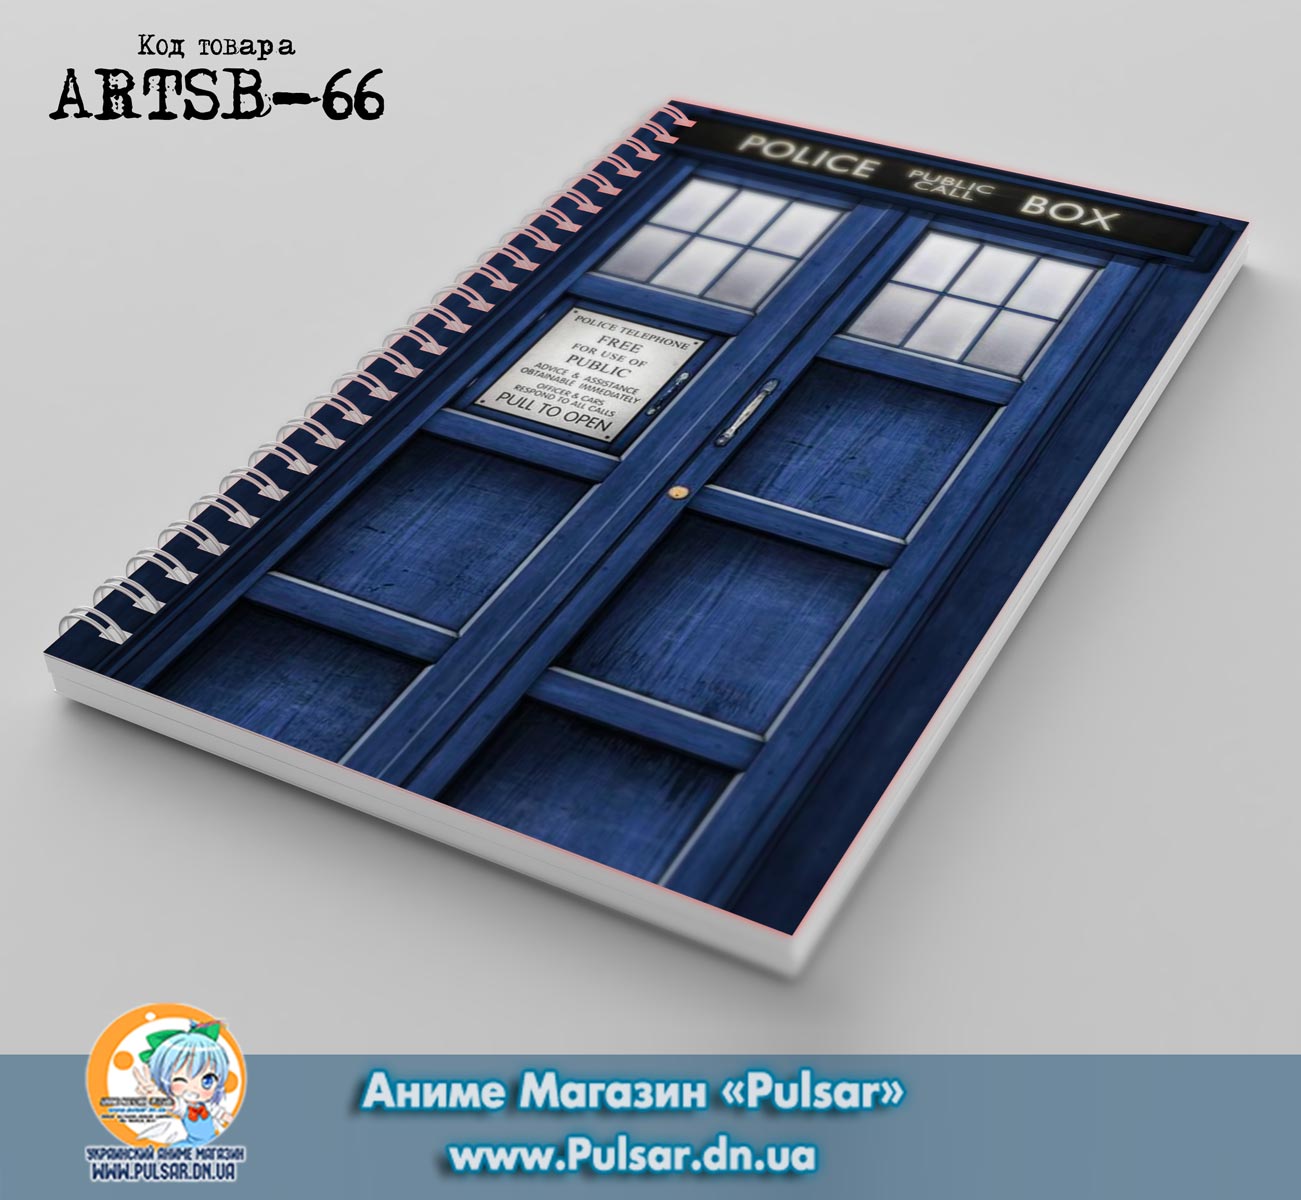 Скетчбук ( sketchbook) на пружине 80 листов Doctor Who - Tardis